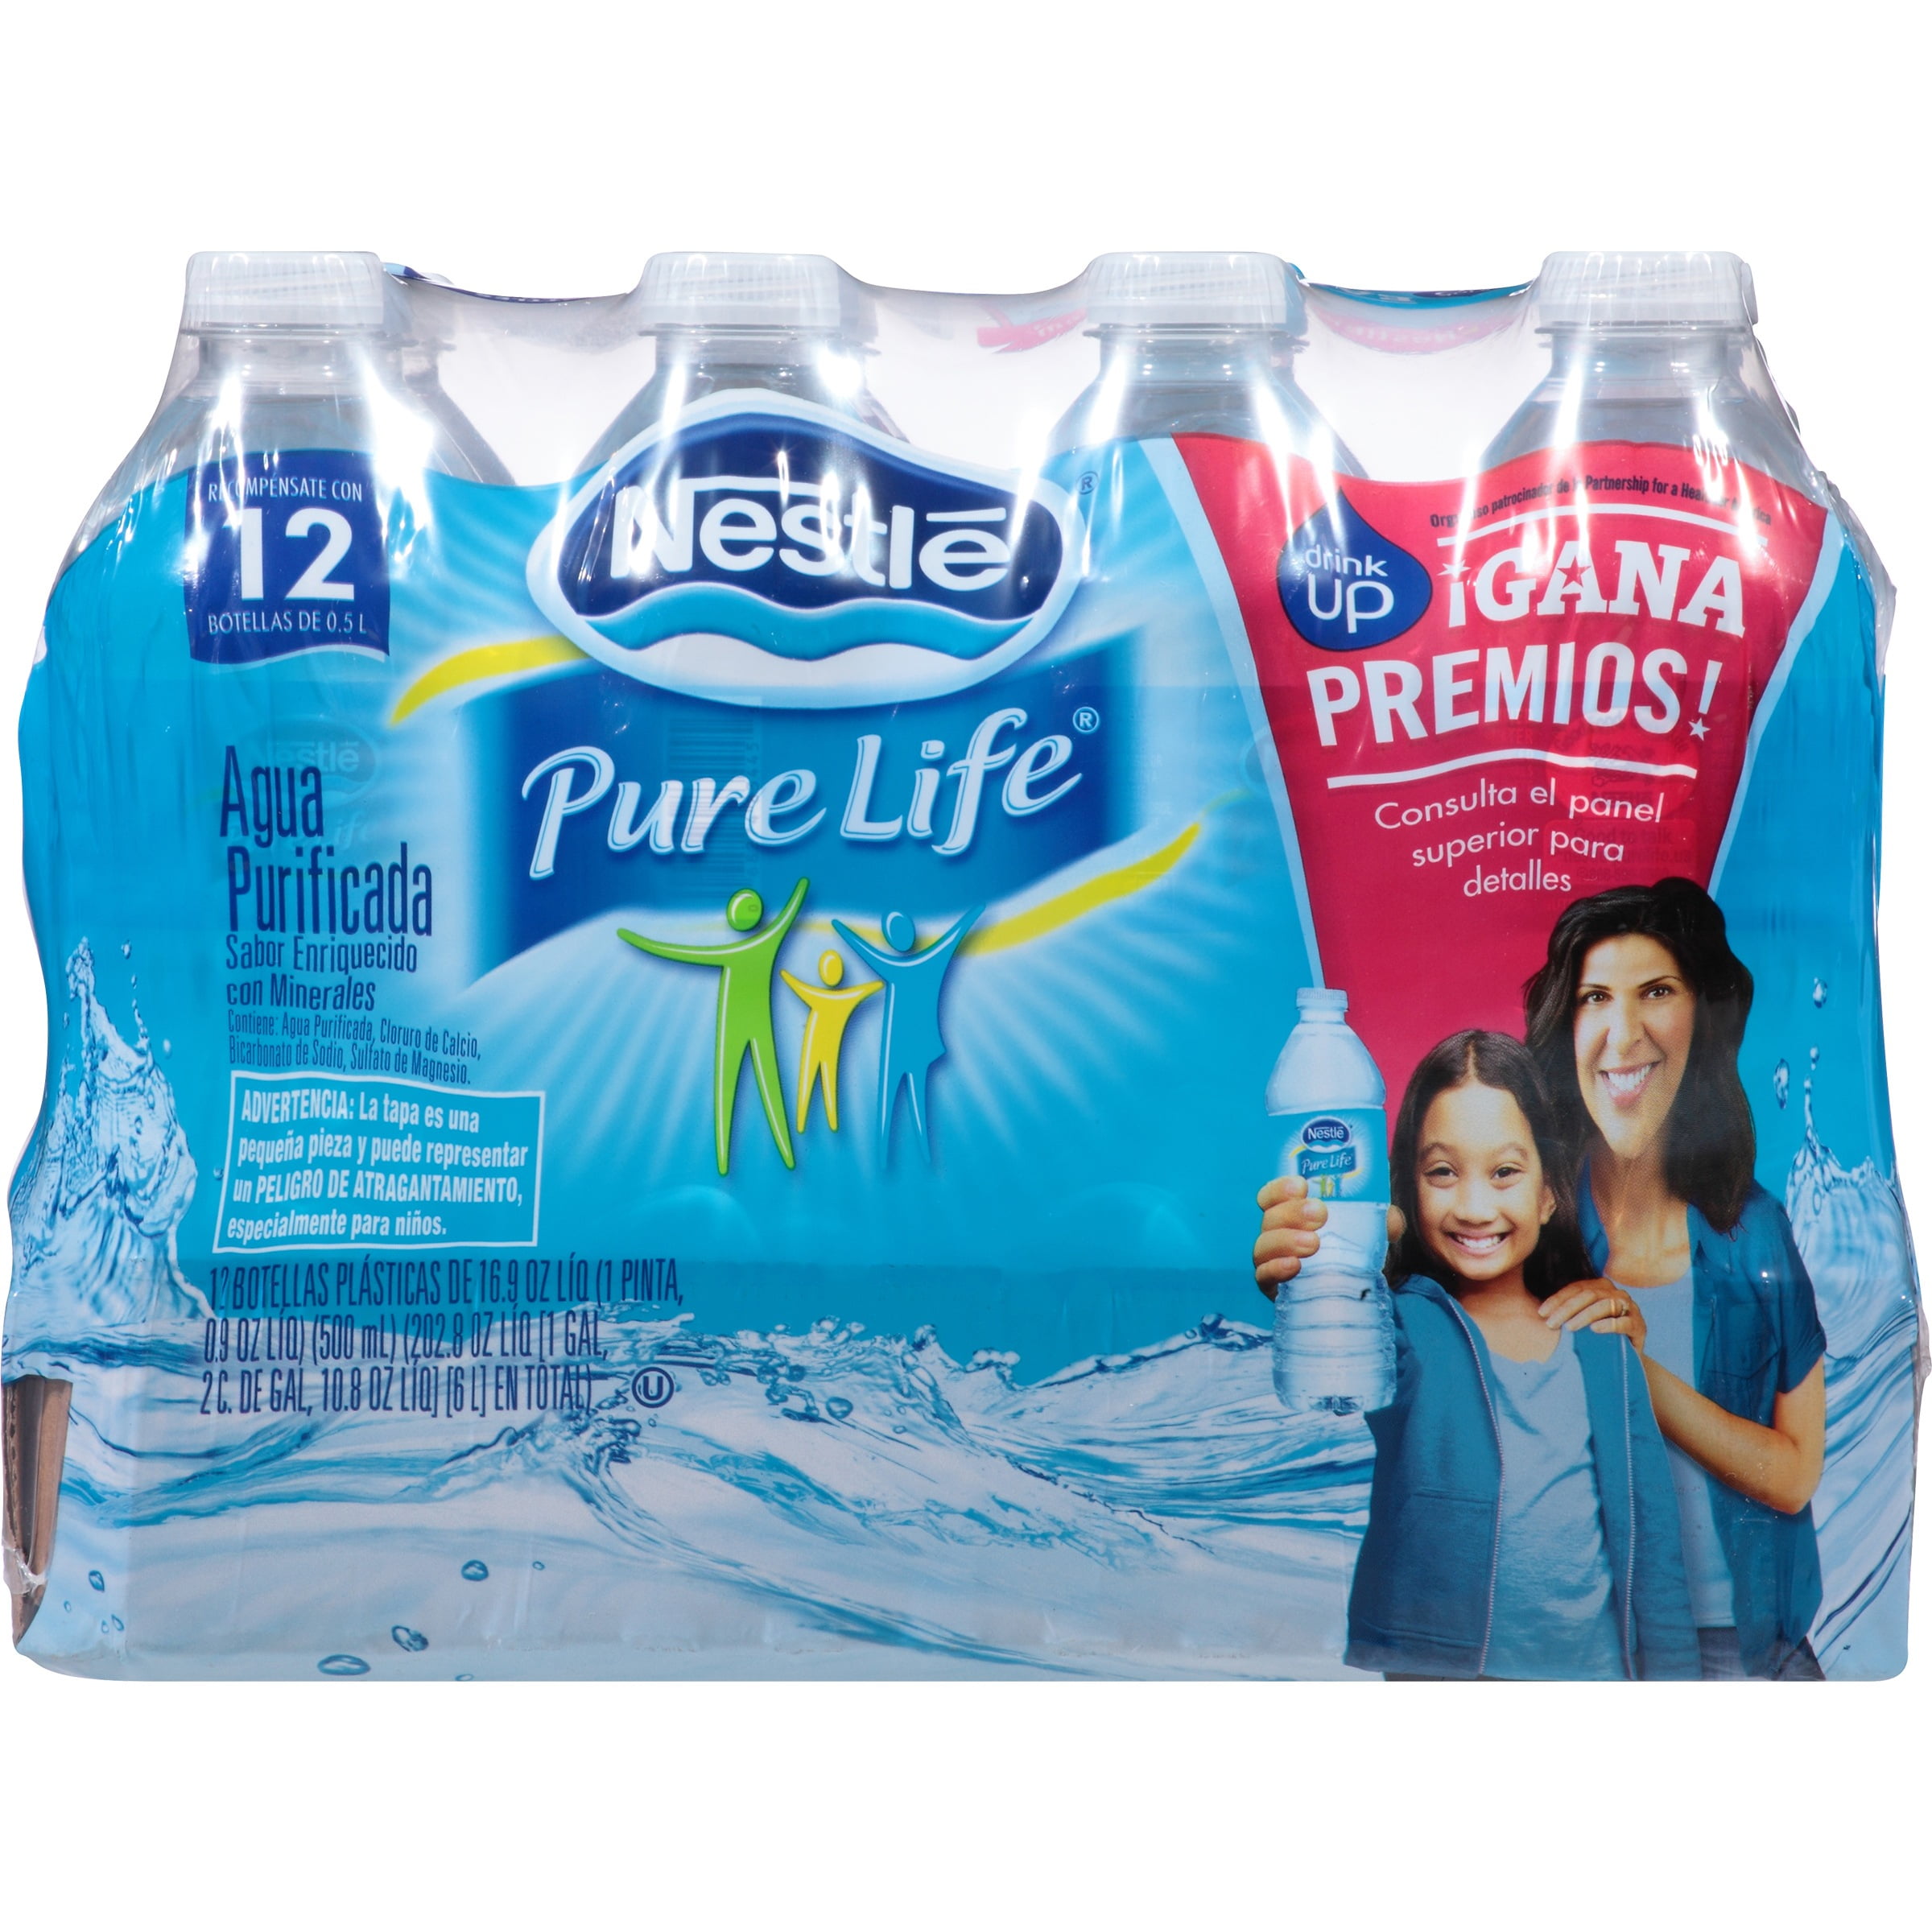 Pure Life Purified Water, 12 ct/8 oz - Ralphs